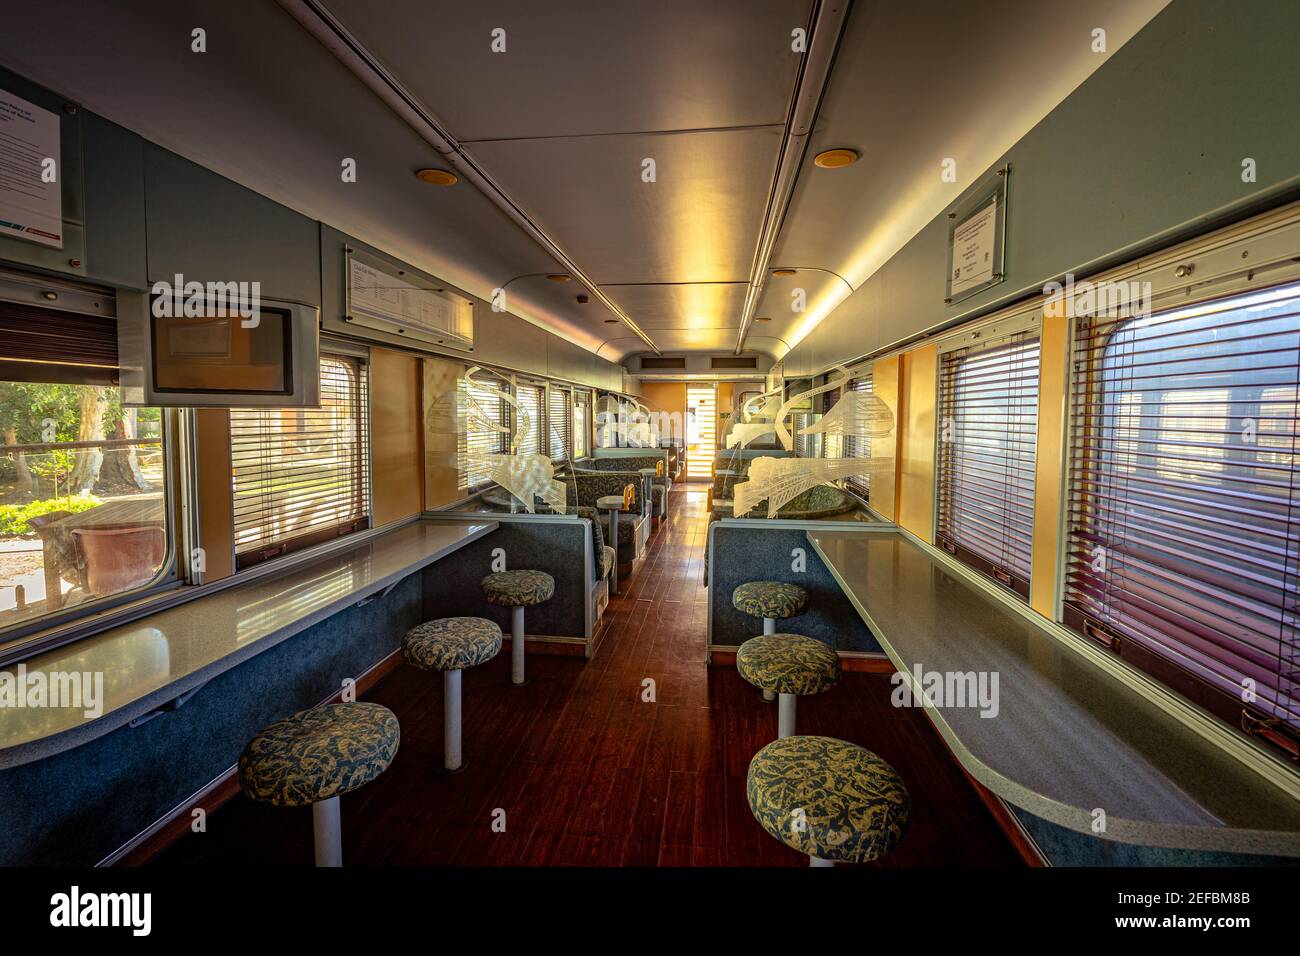 Train dining car interior, restaurant on wheels Stock Photo